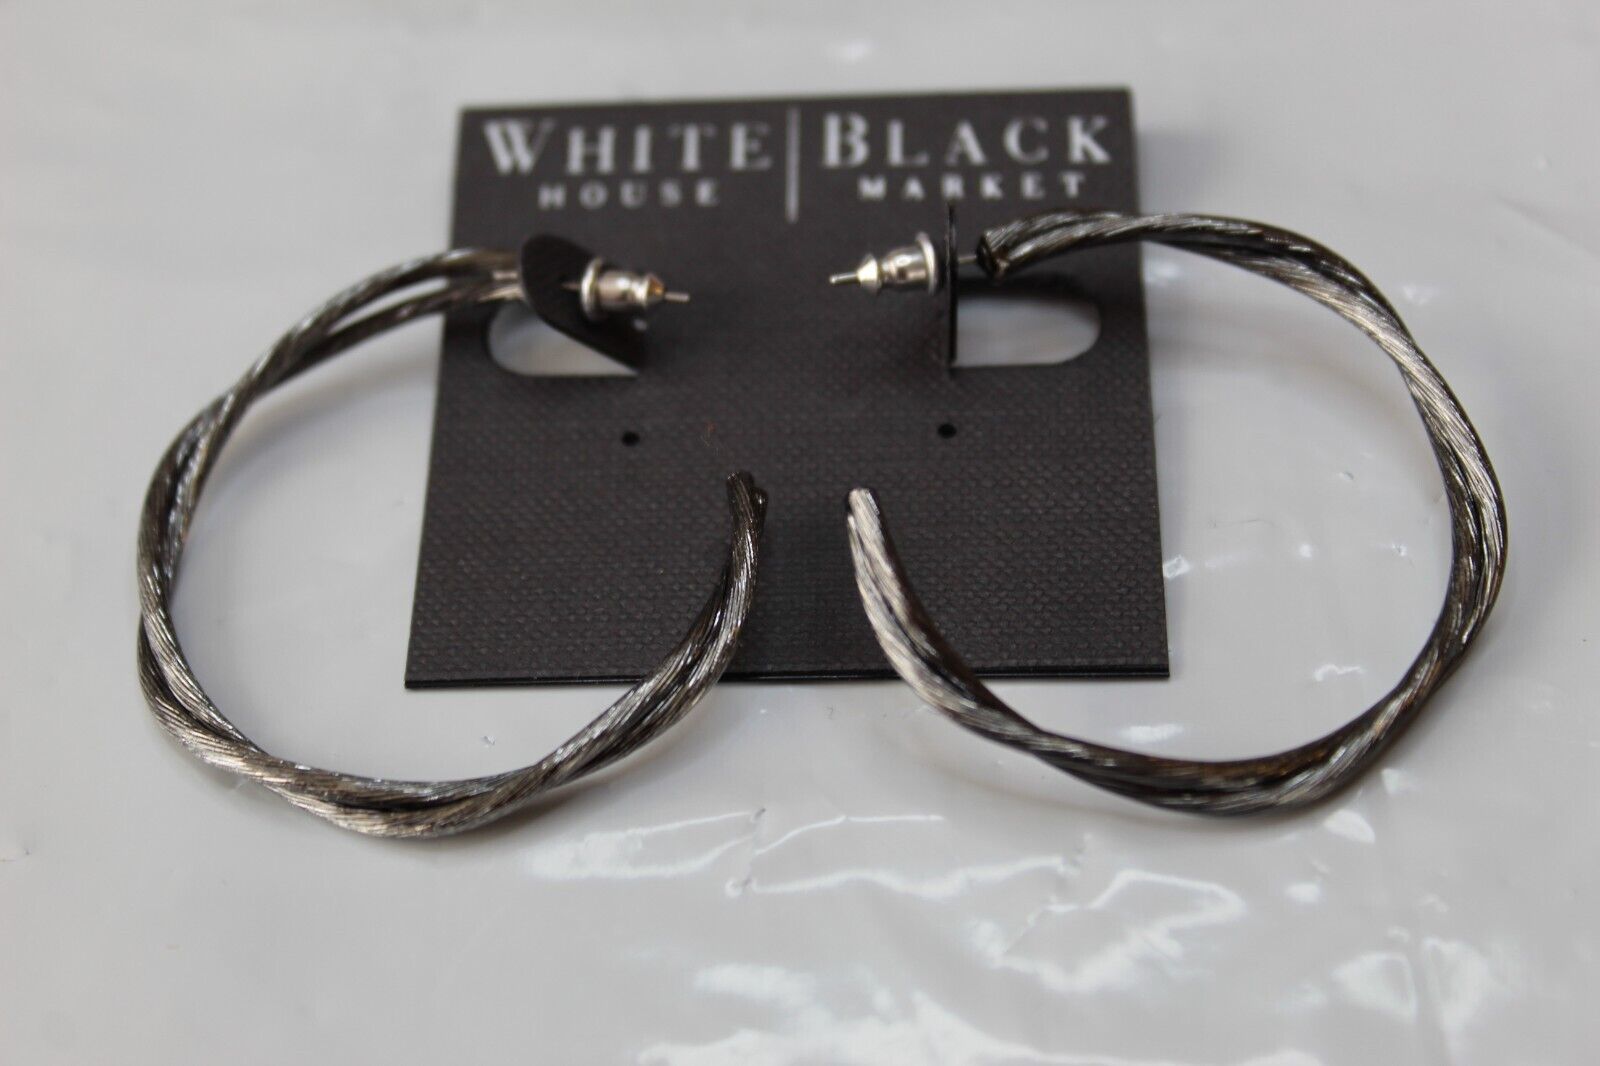 White House Black Market Stud Earrings Silver Tone Black Metallic Hoops 1 3/4 In - $17.79